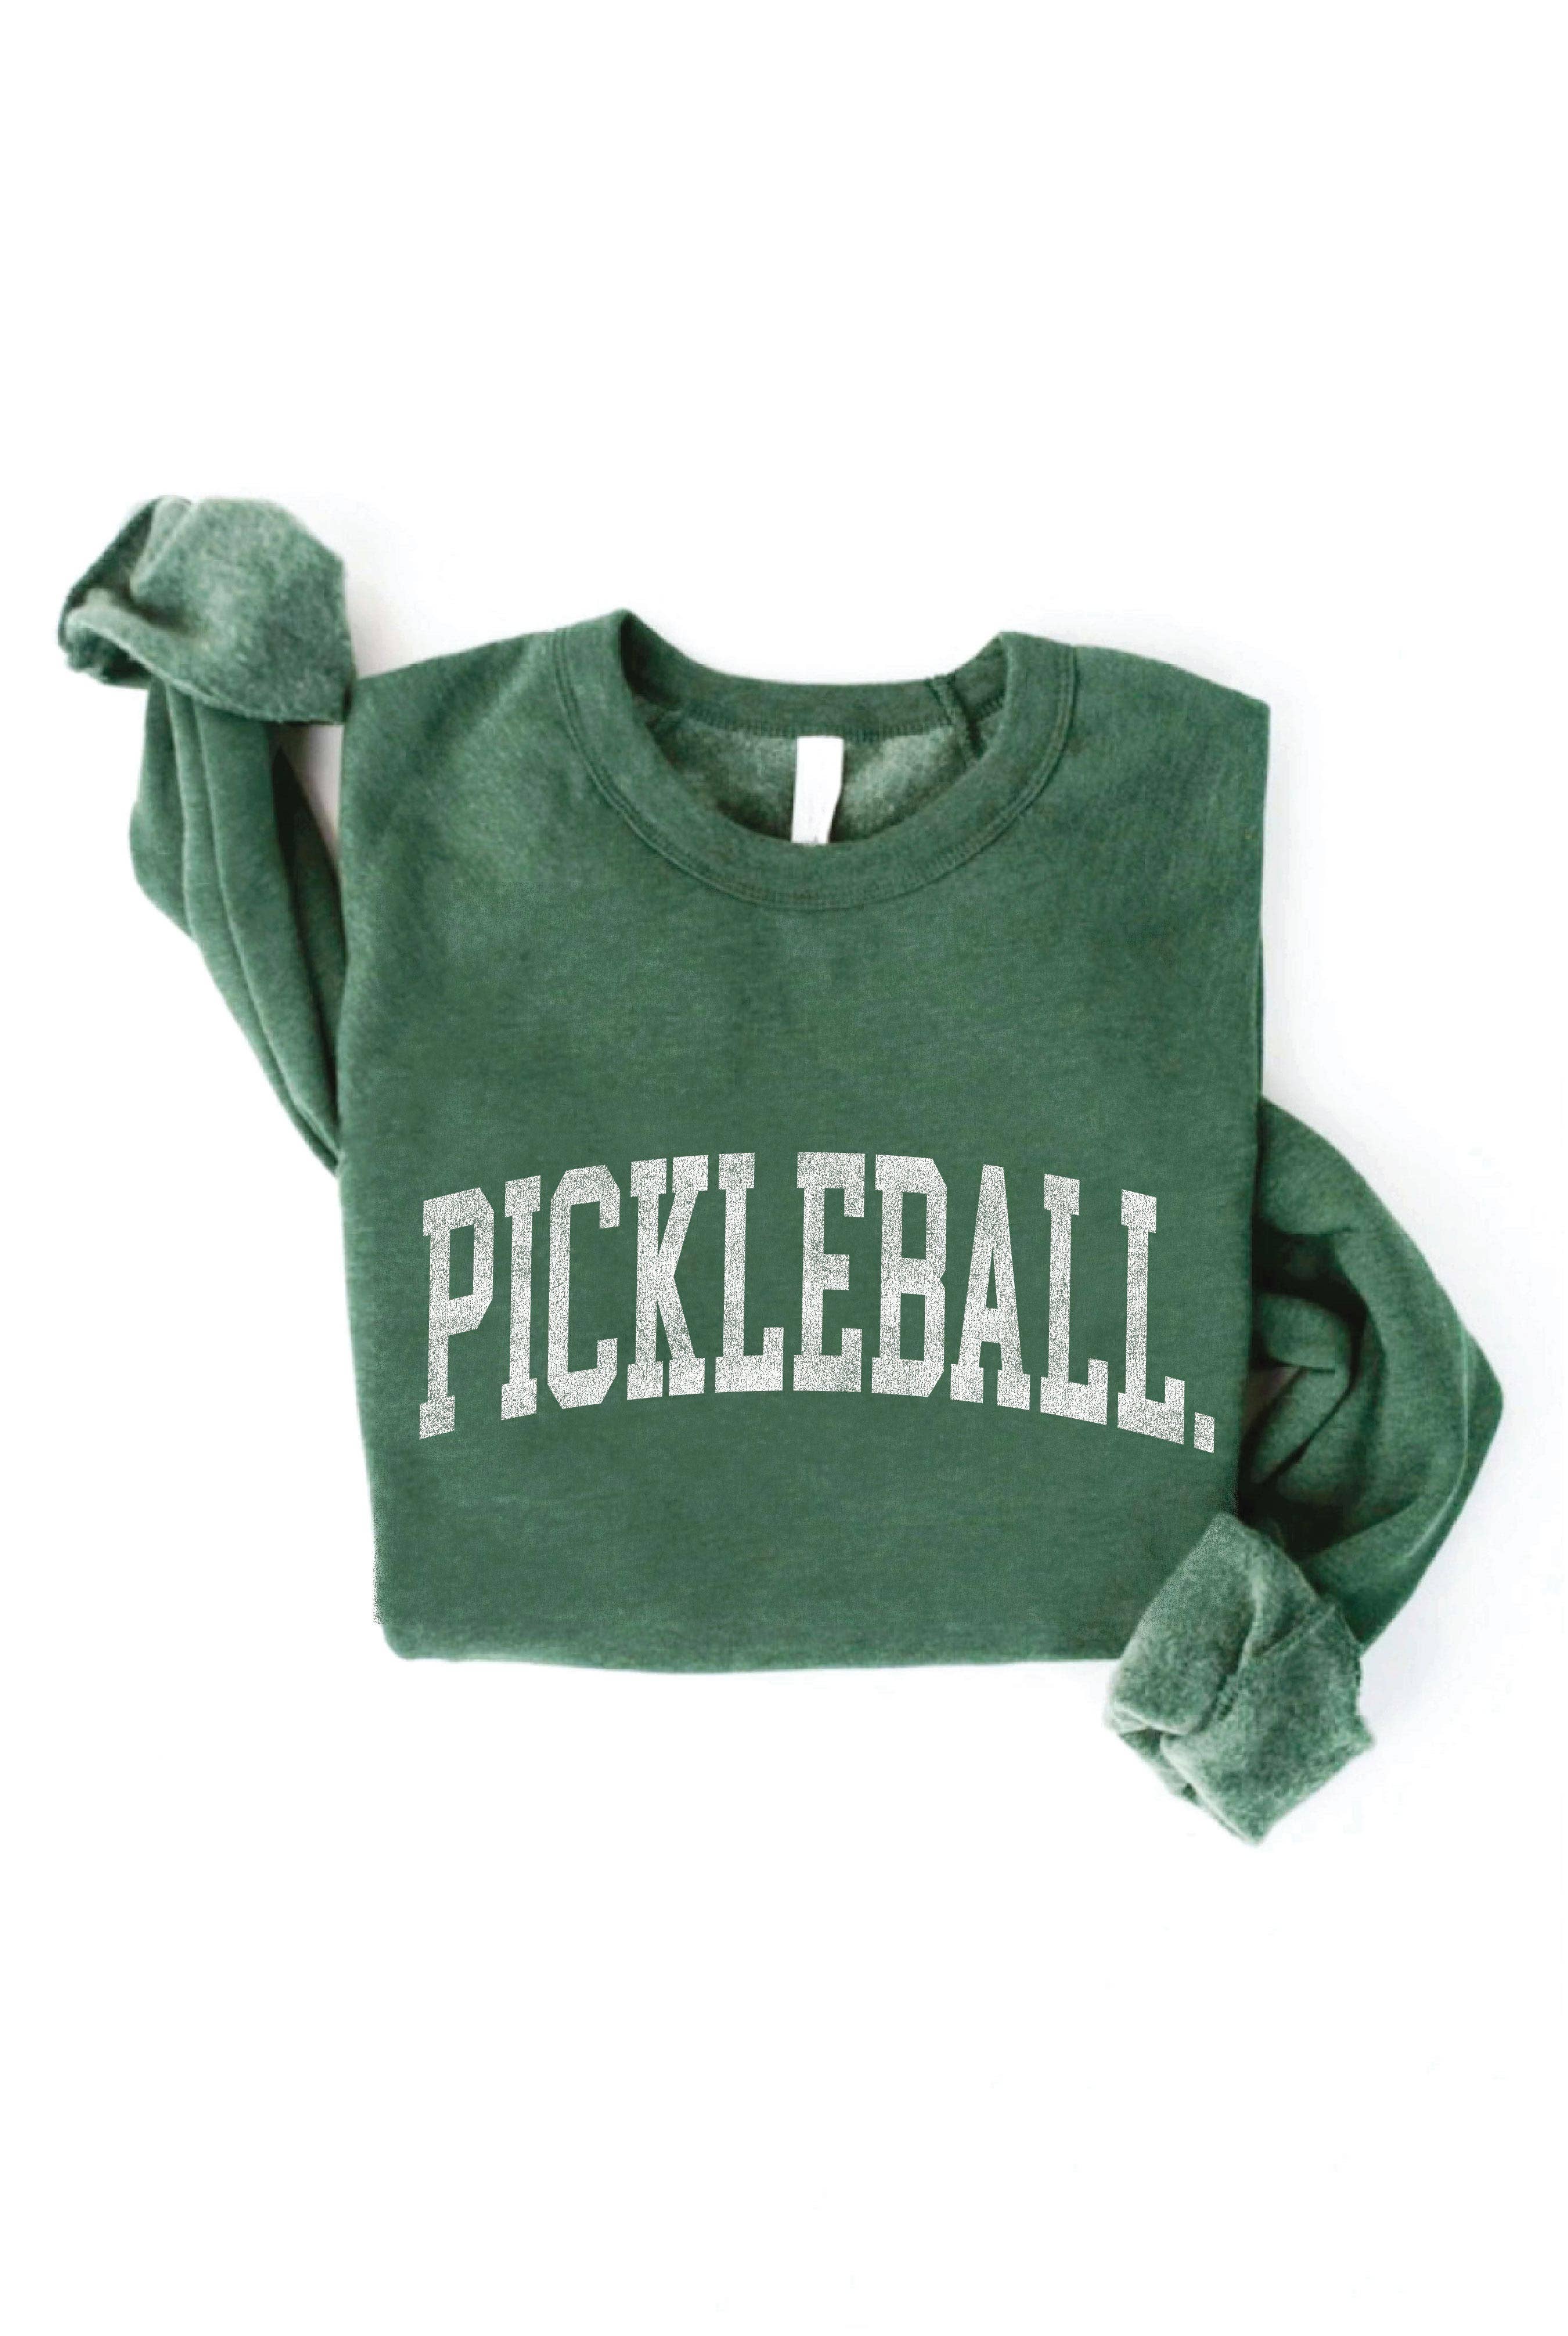 PICKLEBALL Graphic Sweatshirt: L / ATHLETIC HEATHER